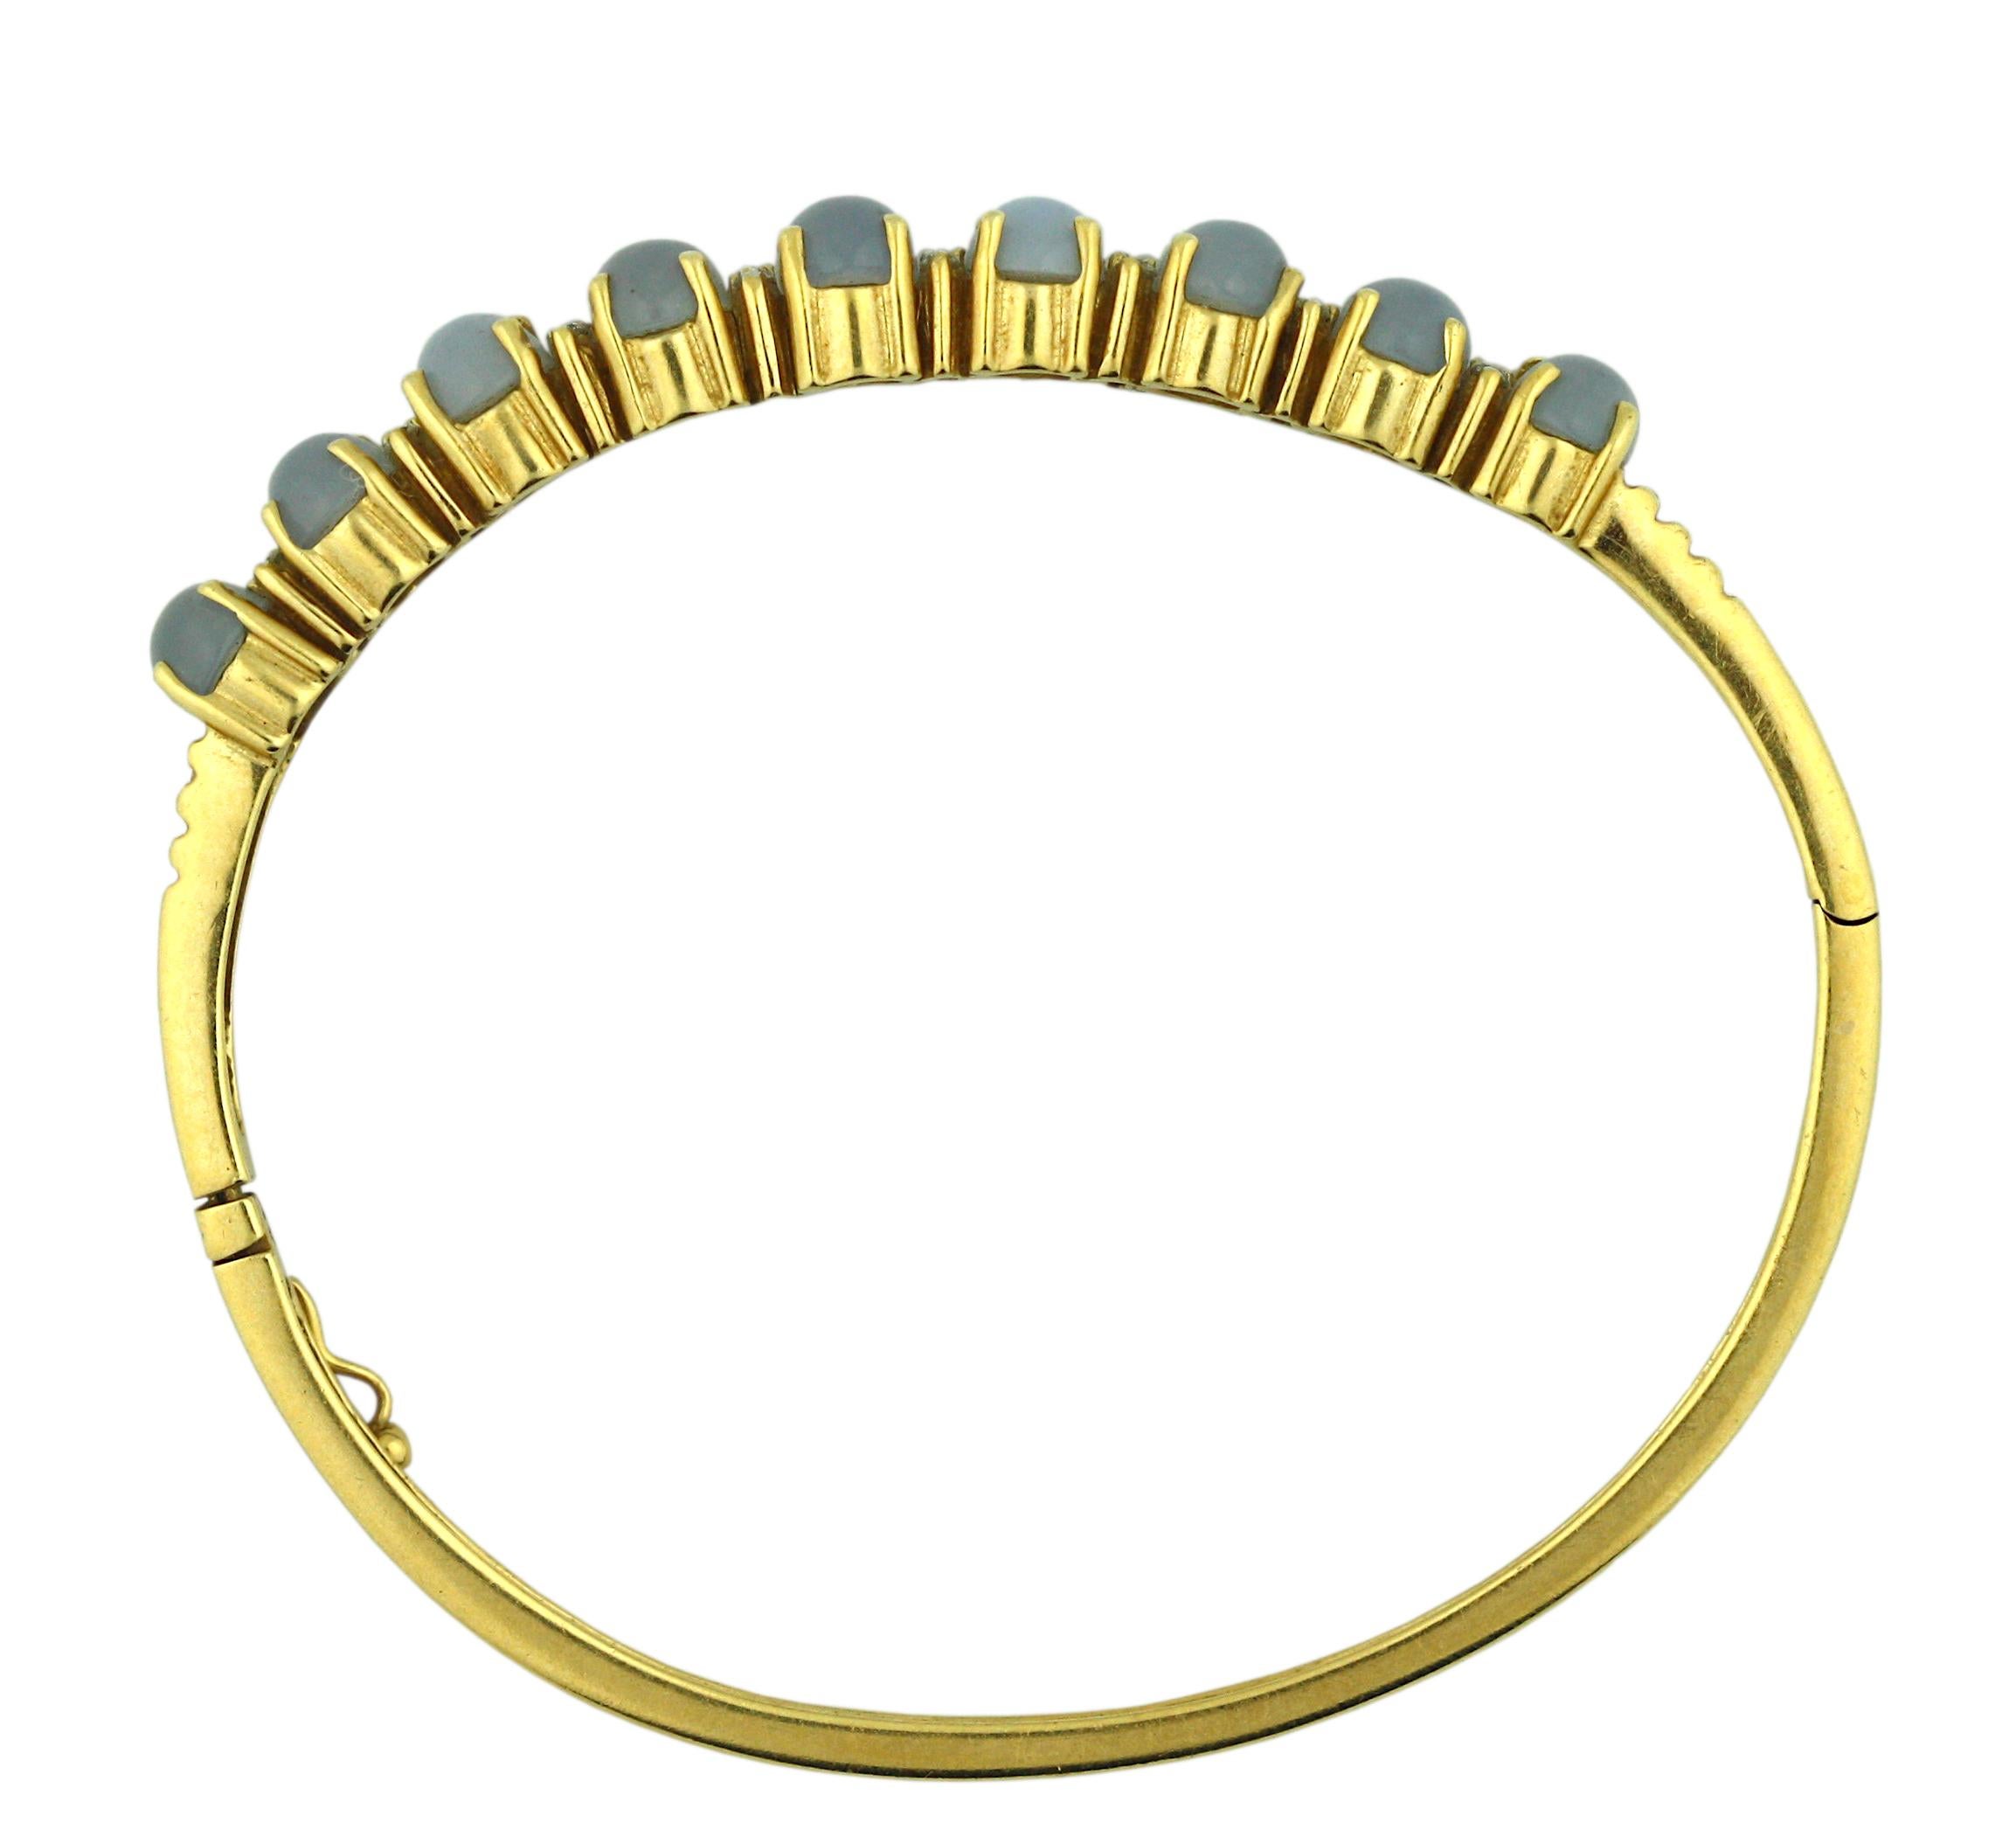 
Moonstone Bangle Bracelet 
Featuring nine moonstones 
Inner circumference 6 1/2 inches, 14K
Bracelet catch clasp